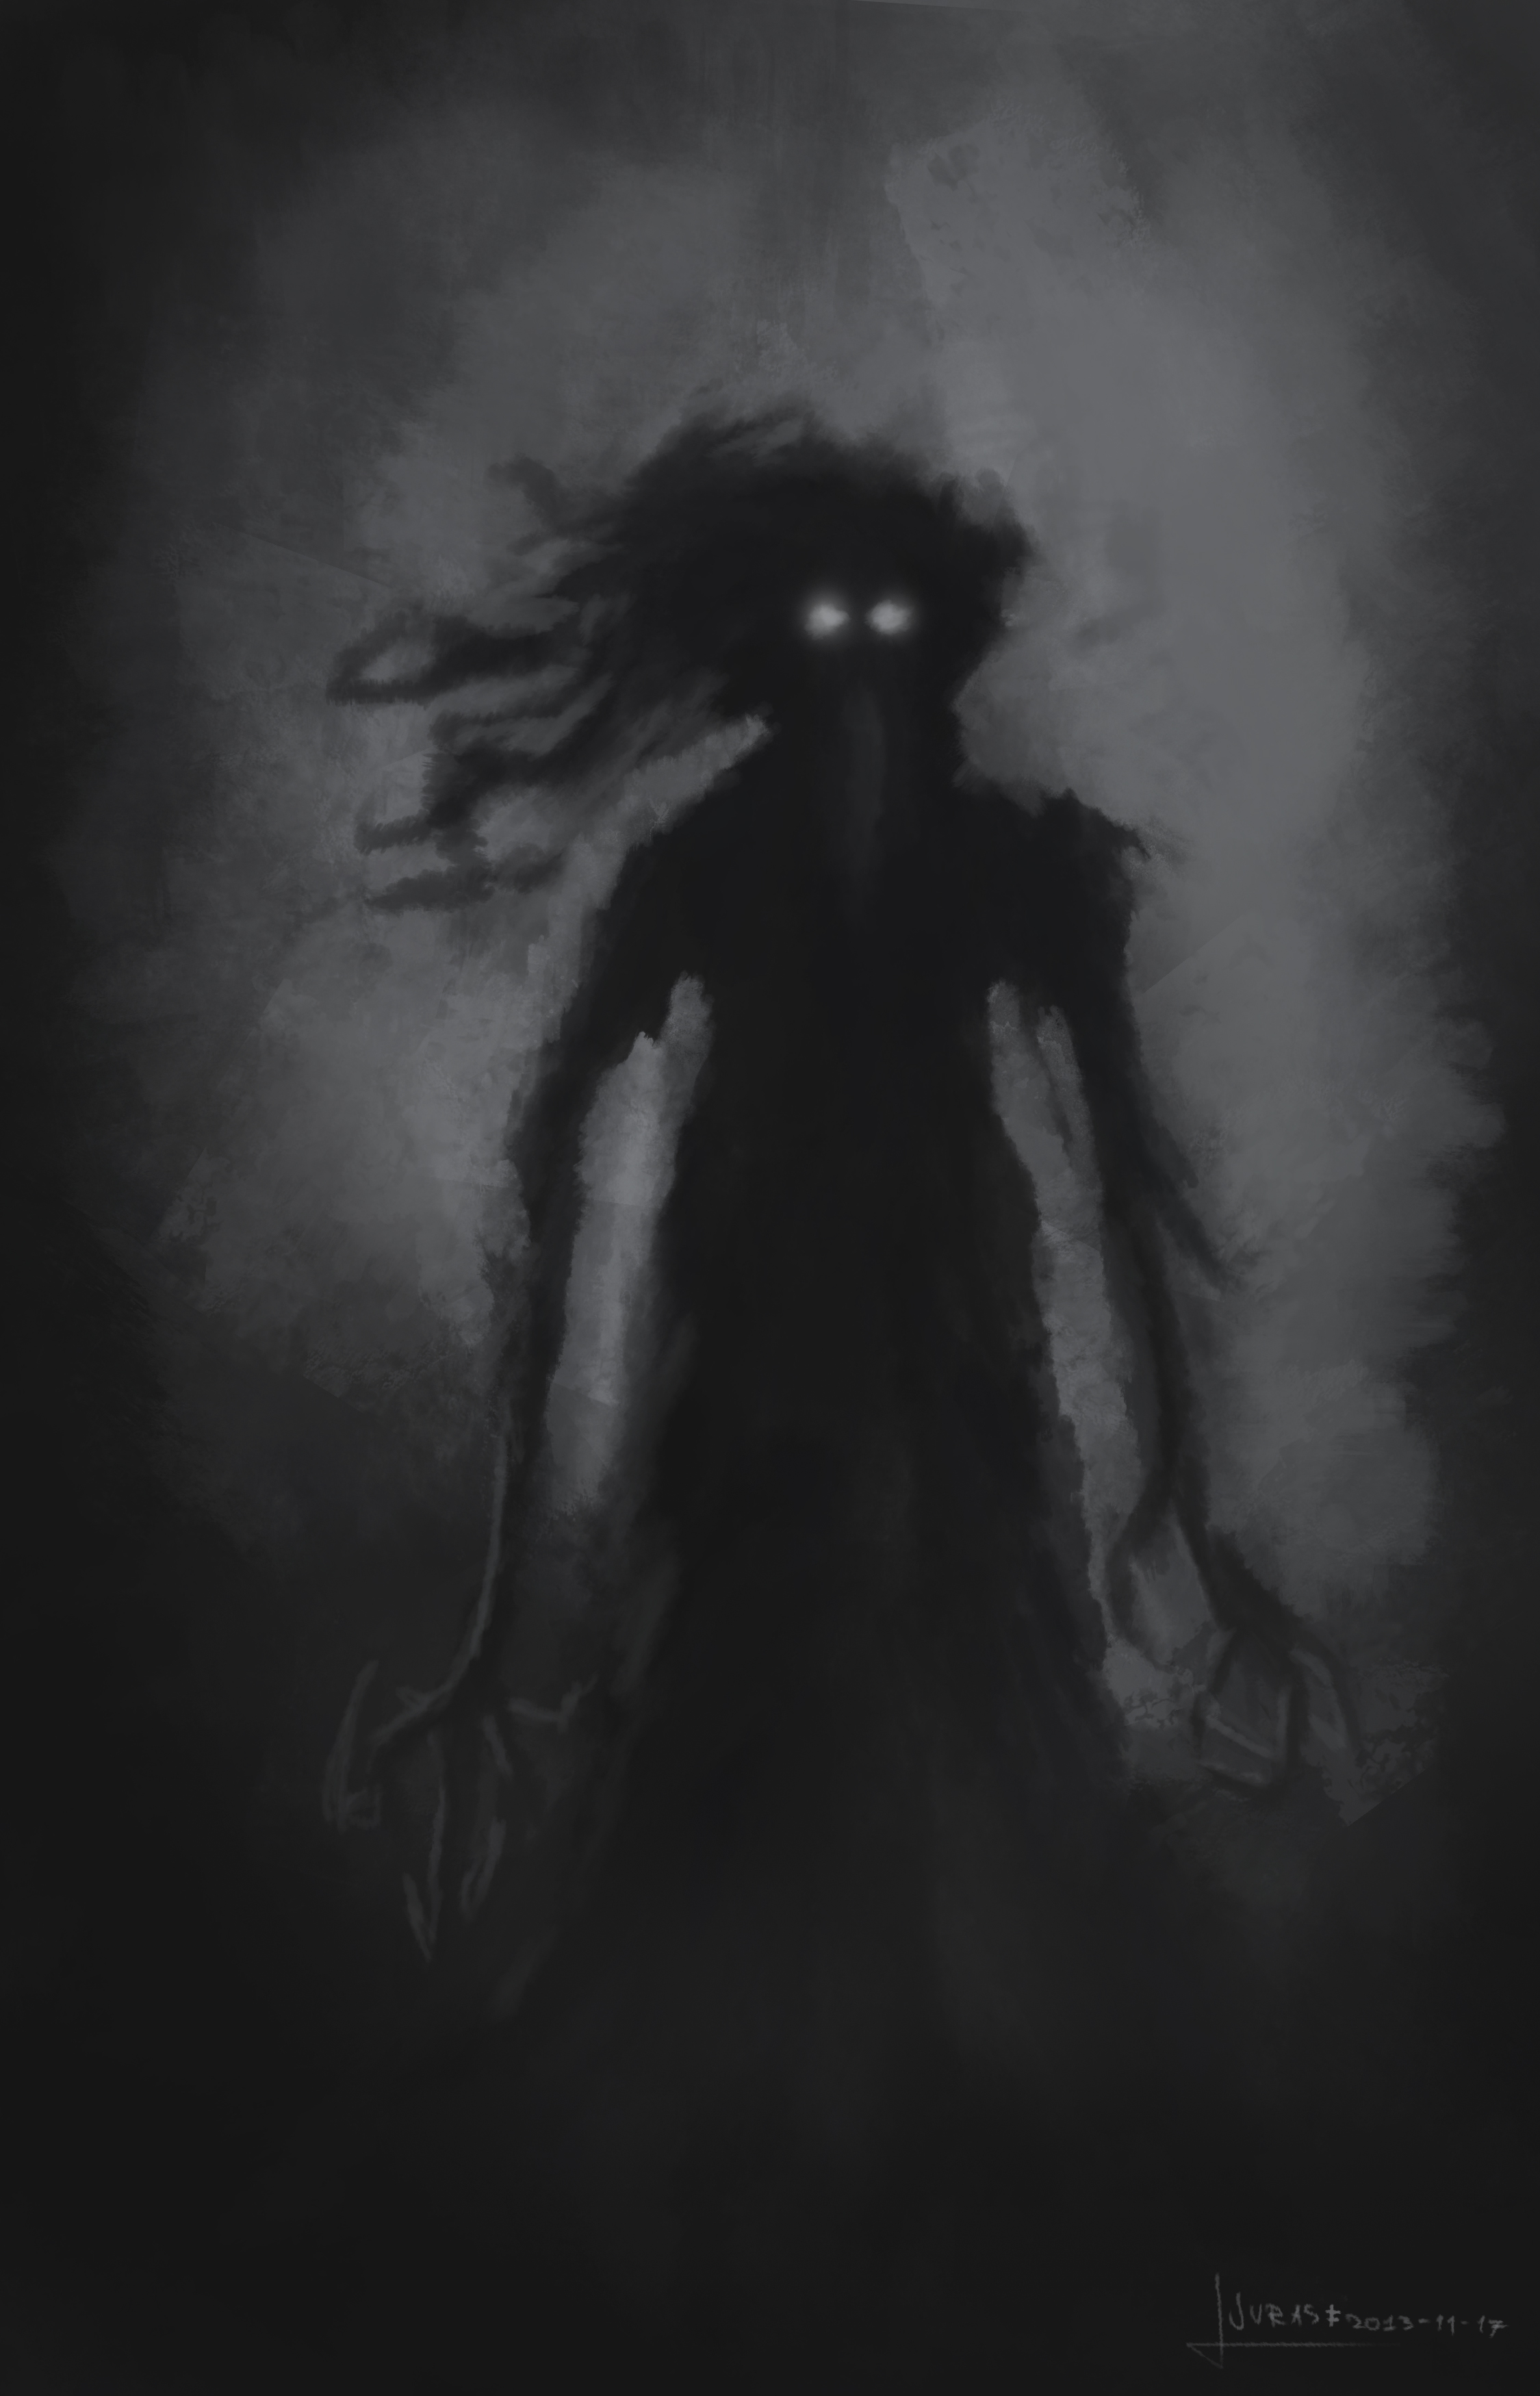 Ghost Monster Concept by Jurasbatas on DeviantArt